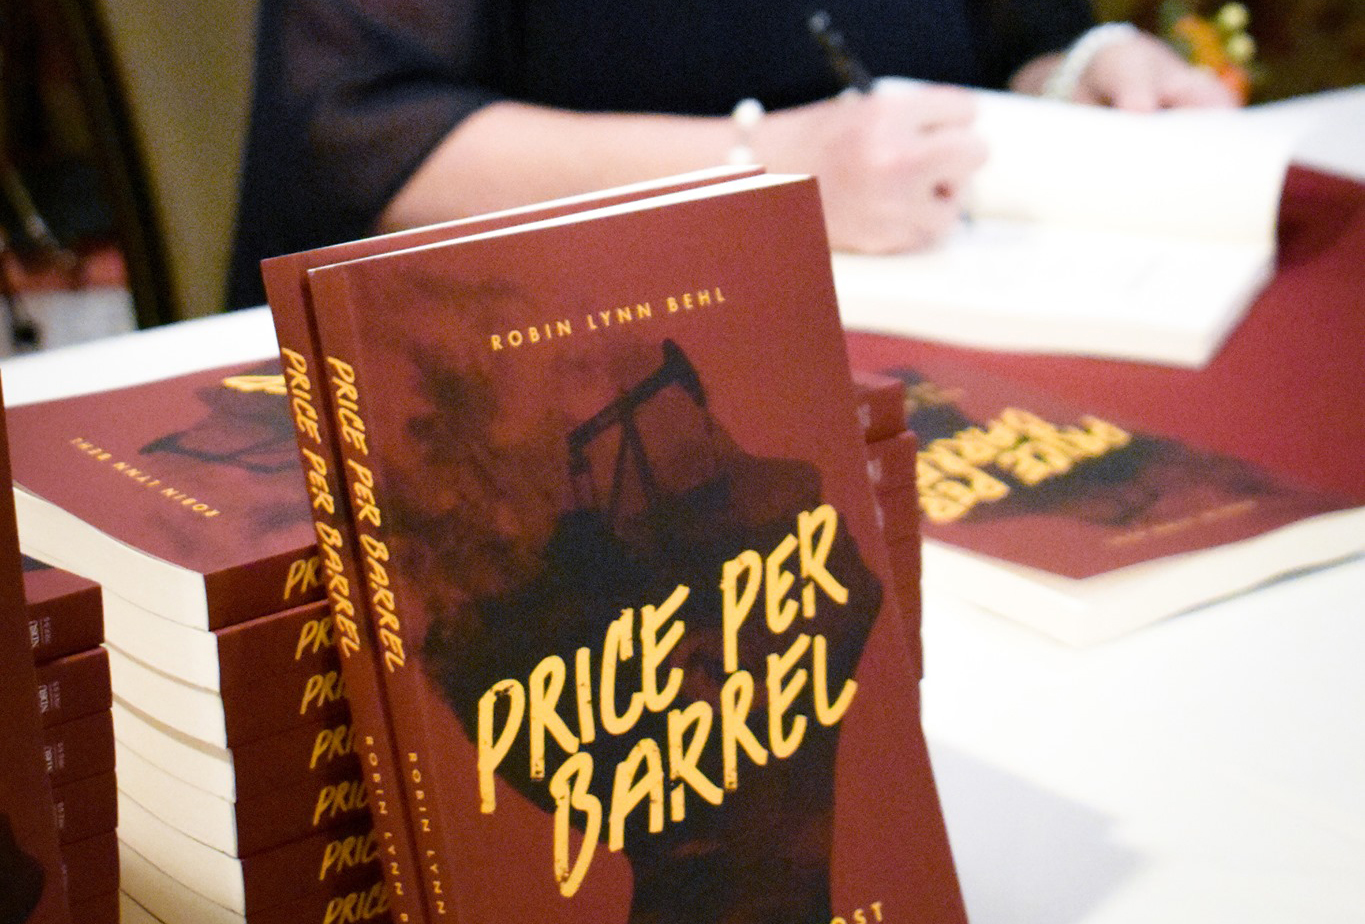 Price Per Barrel Robin Behl Book Signing Event